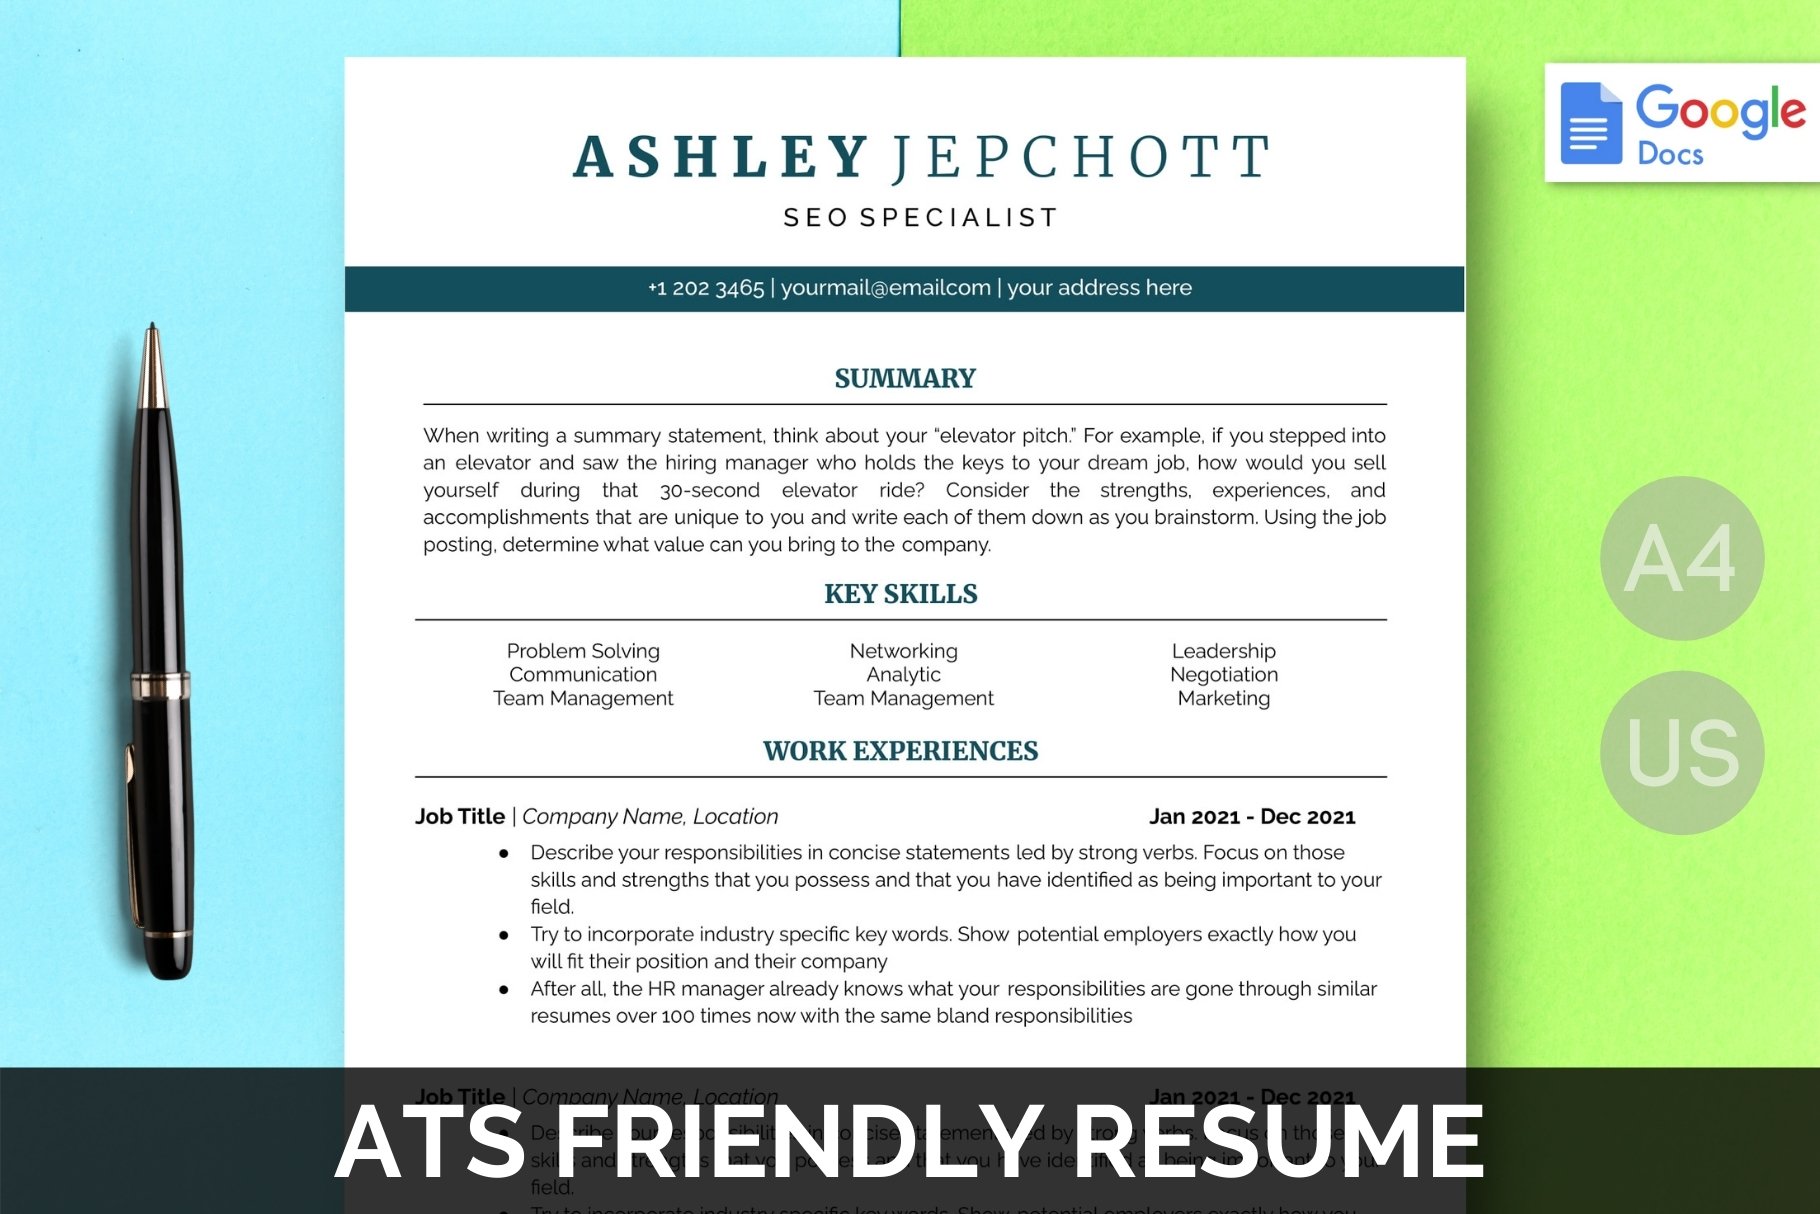 ATS friendly resume google docs cover image.